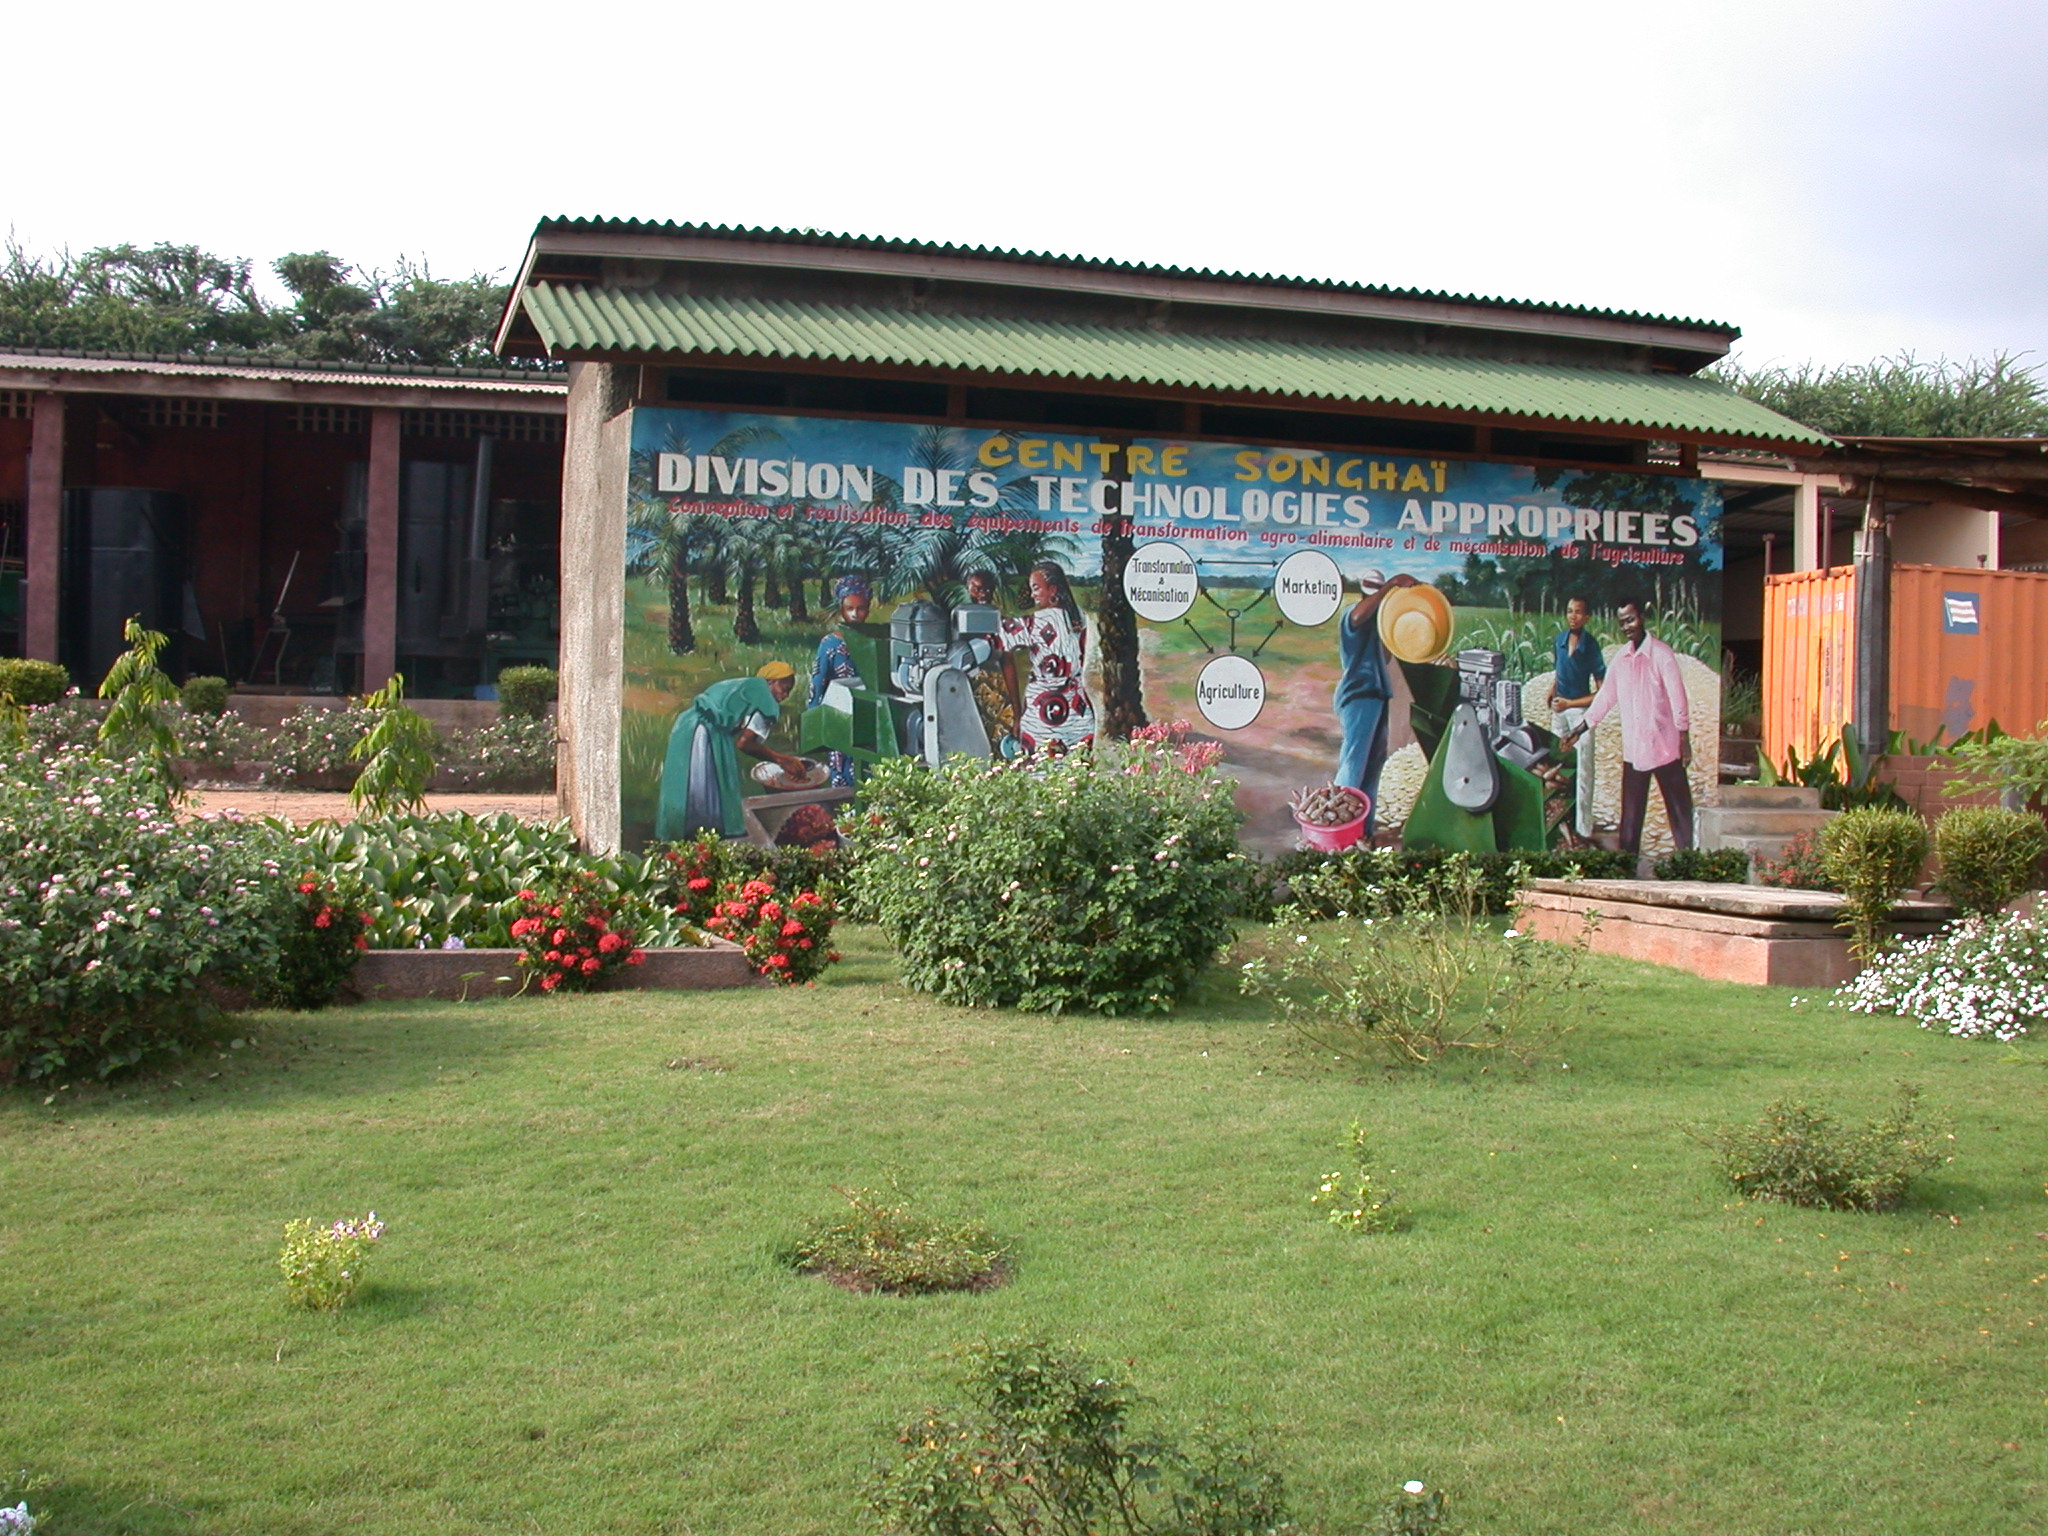 Appropriate Technologies Division Sign, Centre Songhaï, Porto Novo, Benin